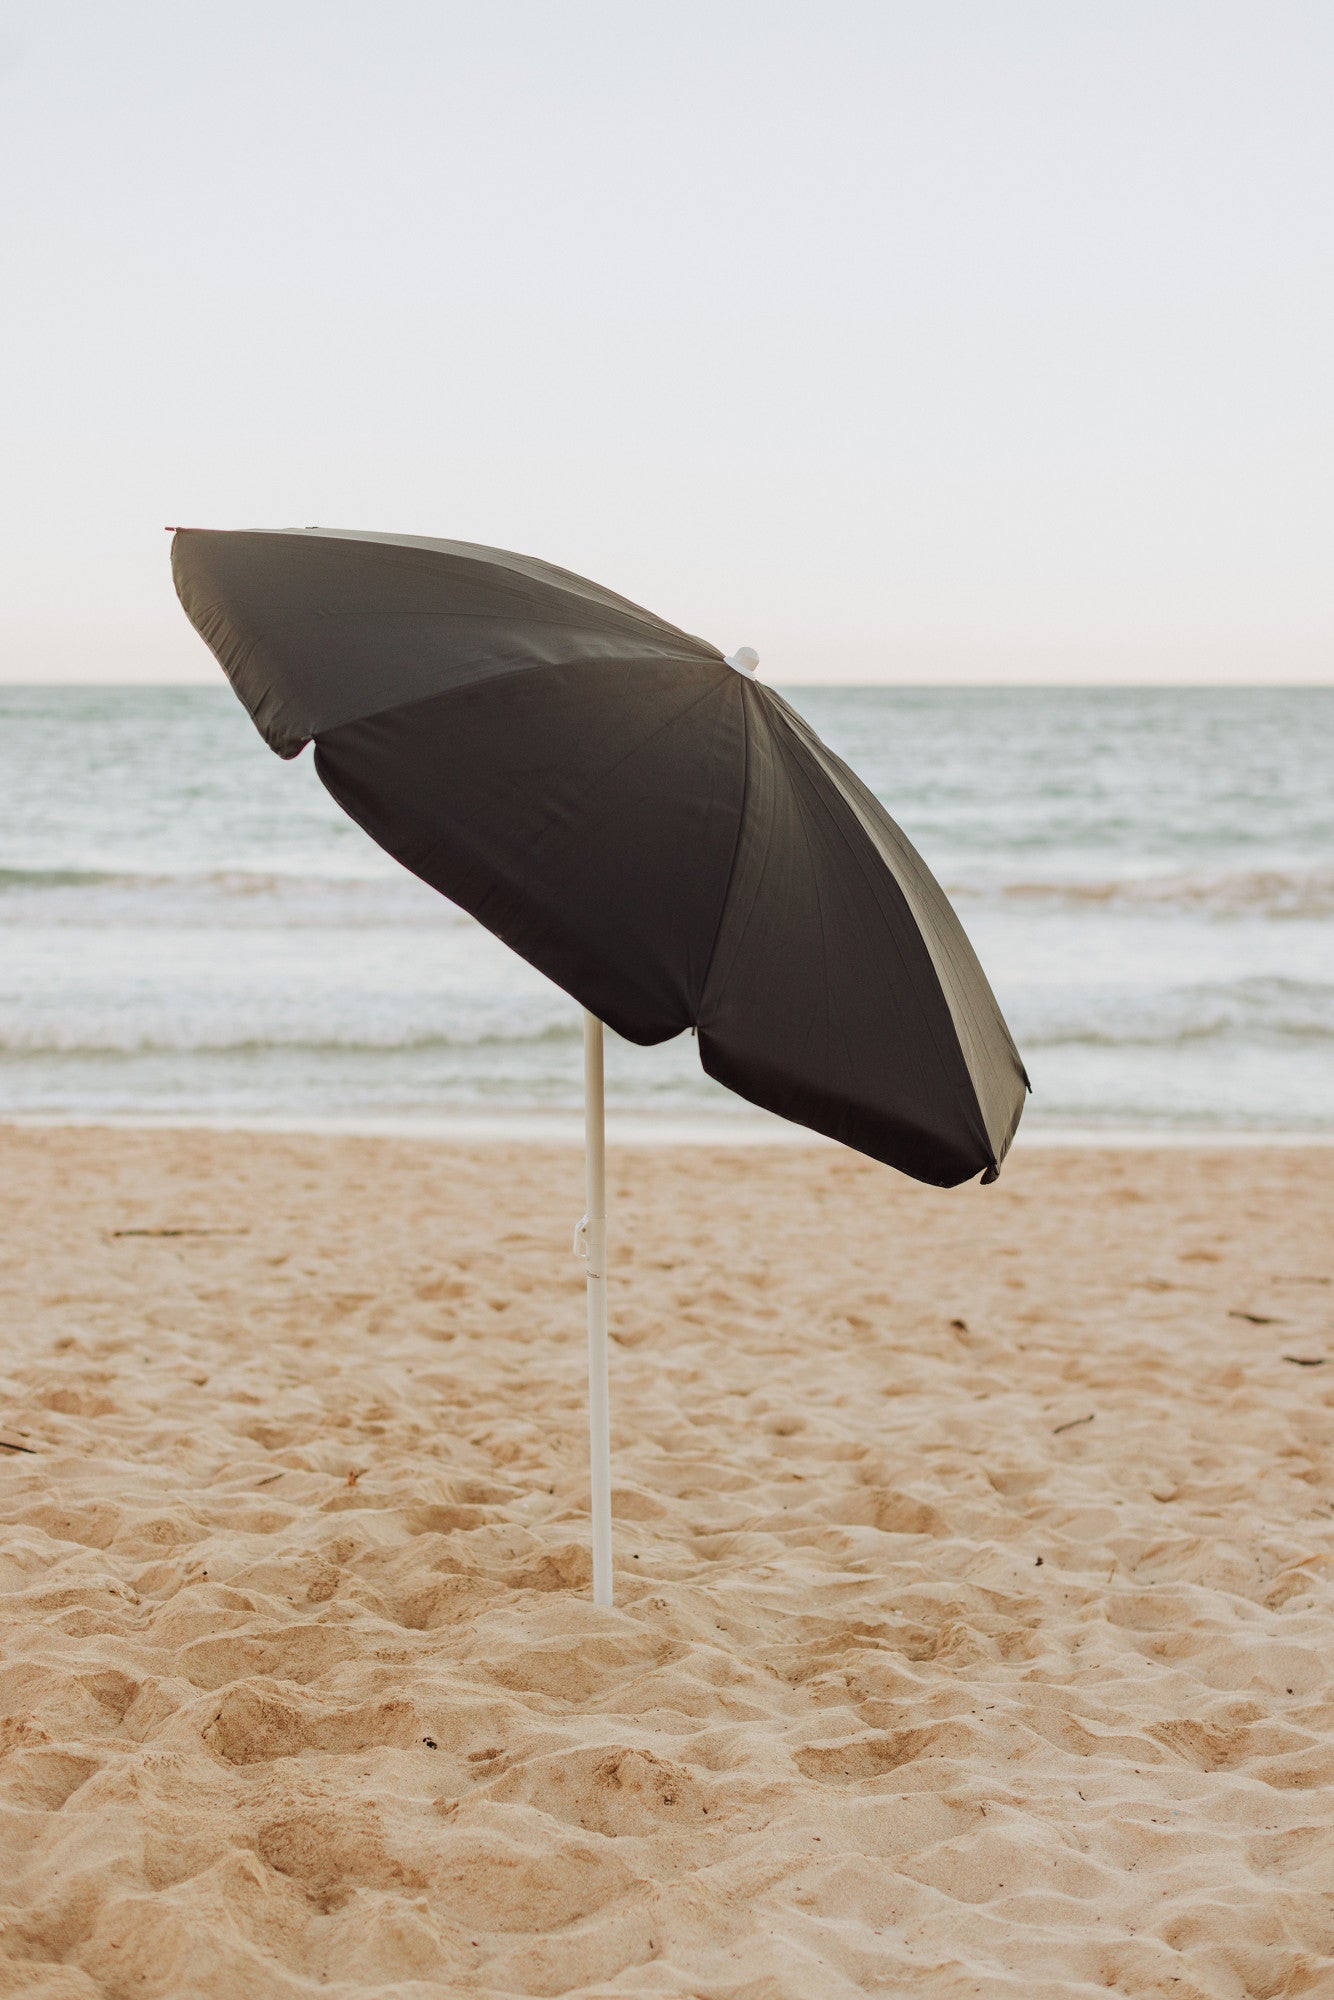 Indiana Hoosiers - 5.5 Ft. Portable Beach Umbrella